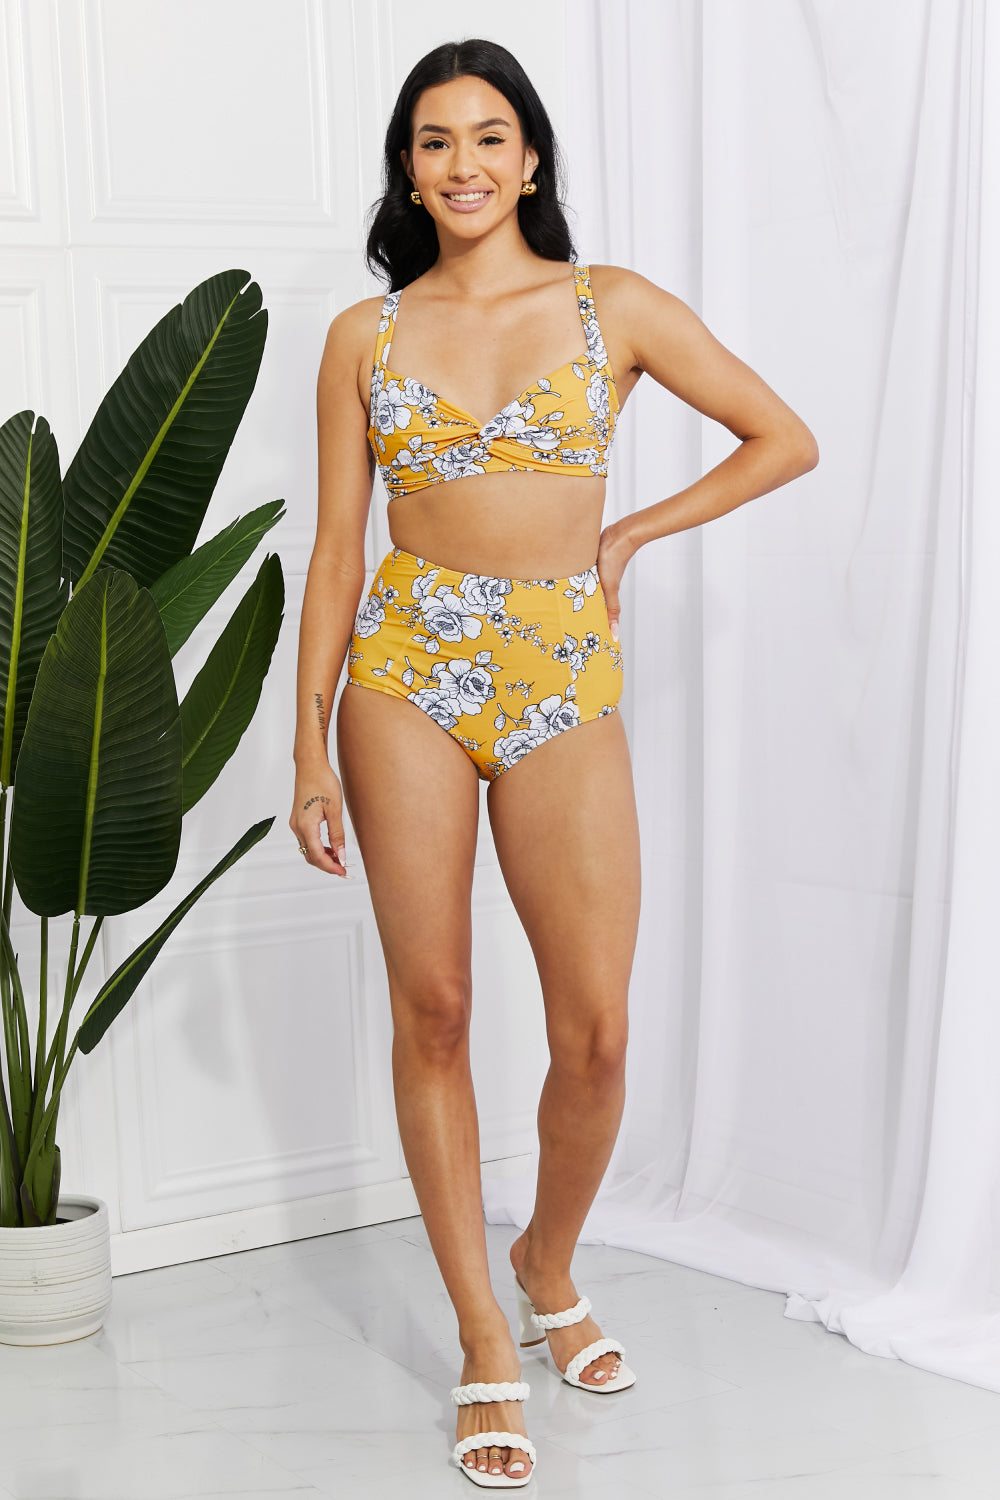 Marina West Swim Take A Dip Twist High-Rise Bikini in Mustard -Online Only